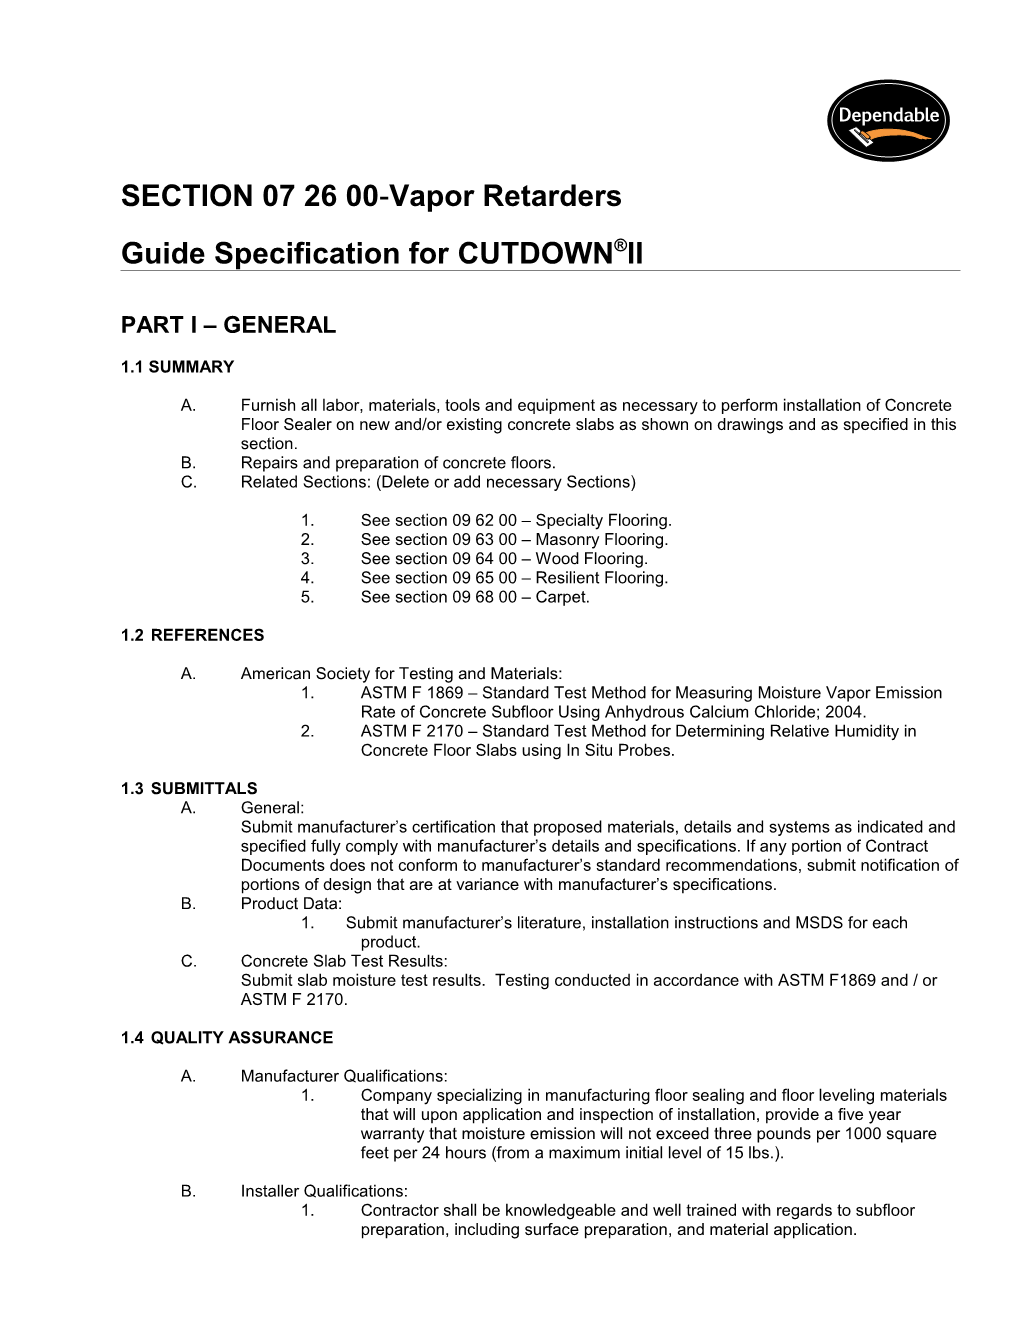 SECTION 0726 00-Vapor Retarders